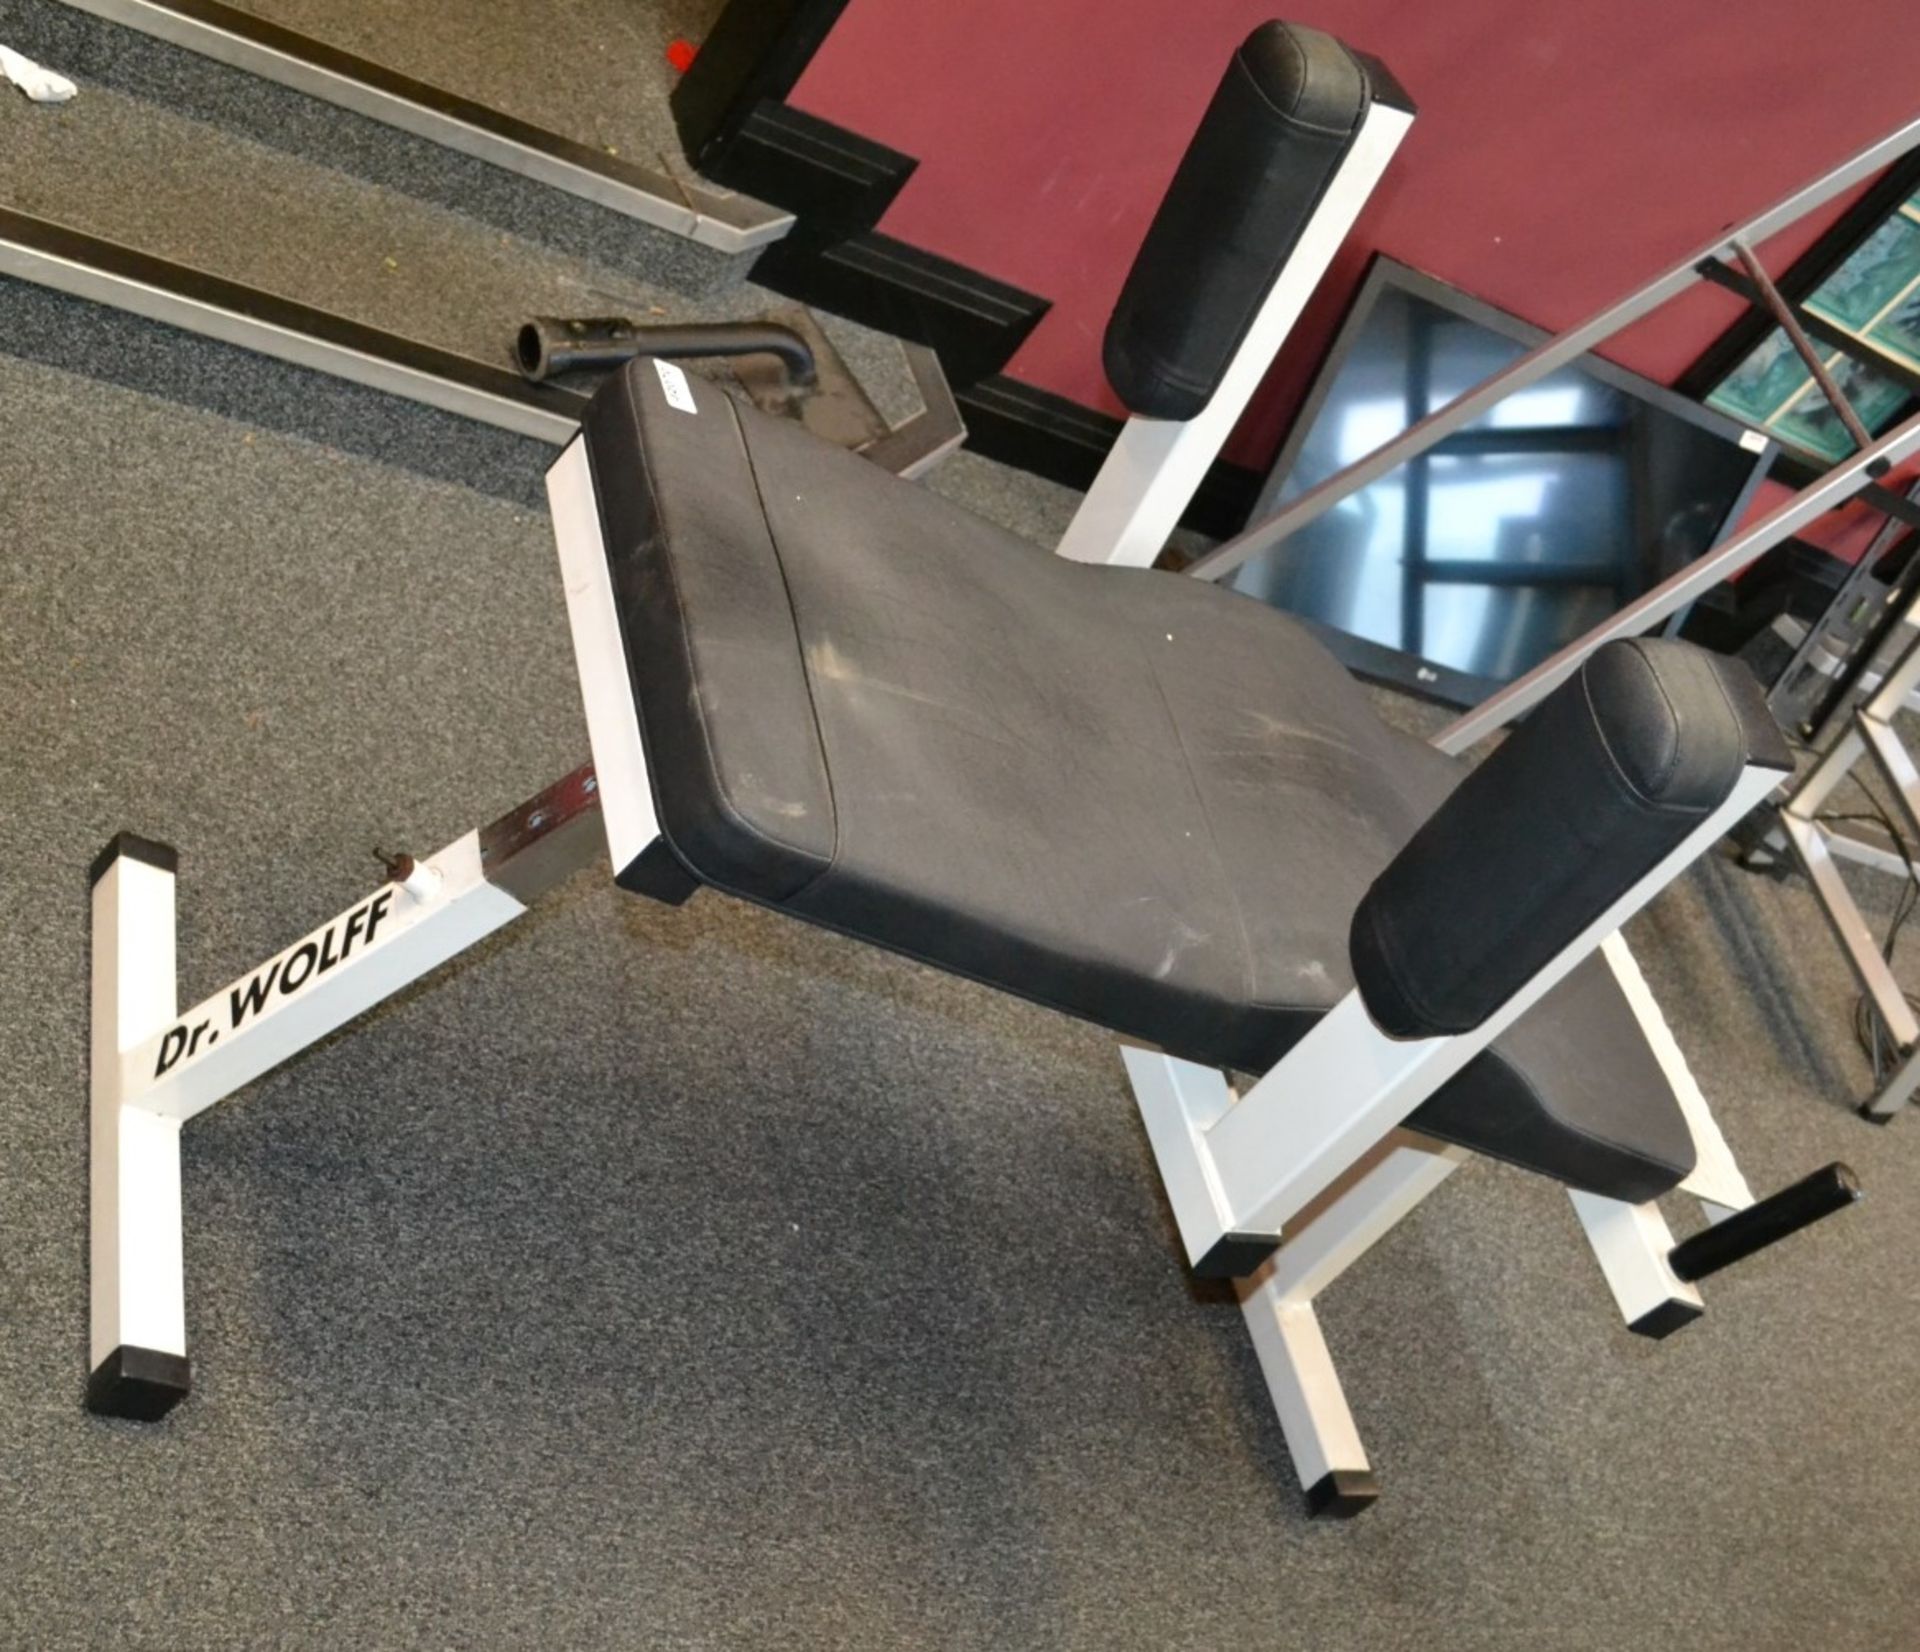 1 x Dr.Wolff Abdominal Fitness Bench - Dimensions: L140 x H100 x W50cm - Ref: J2070/1FG - CL356 -